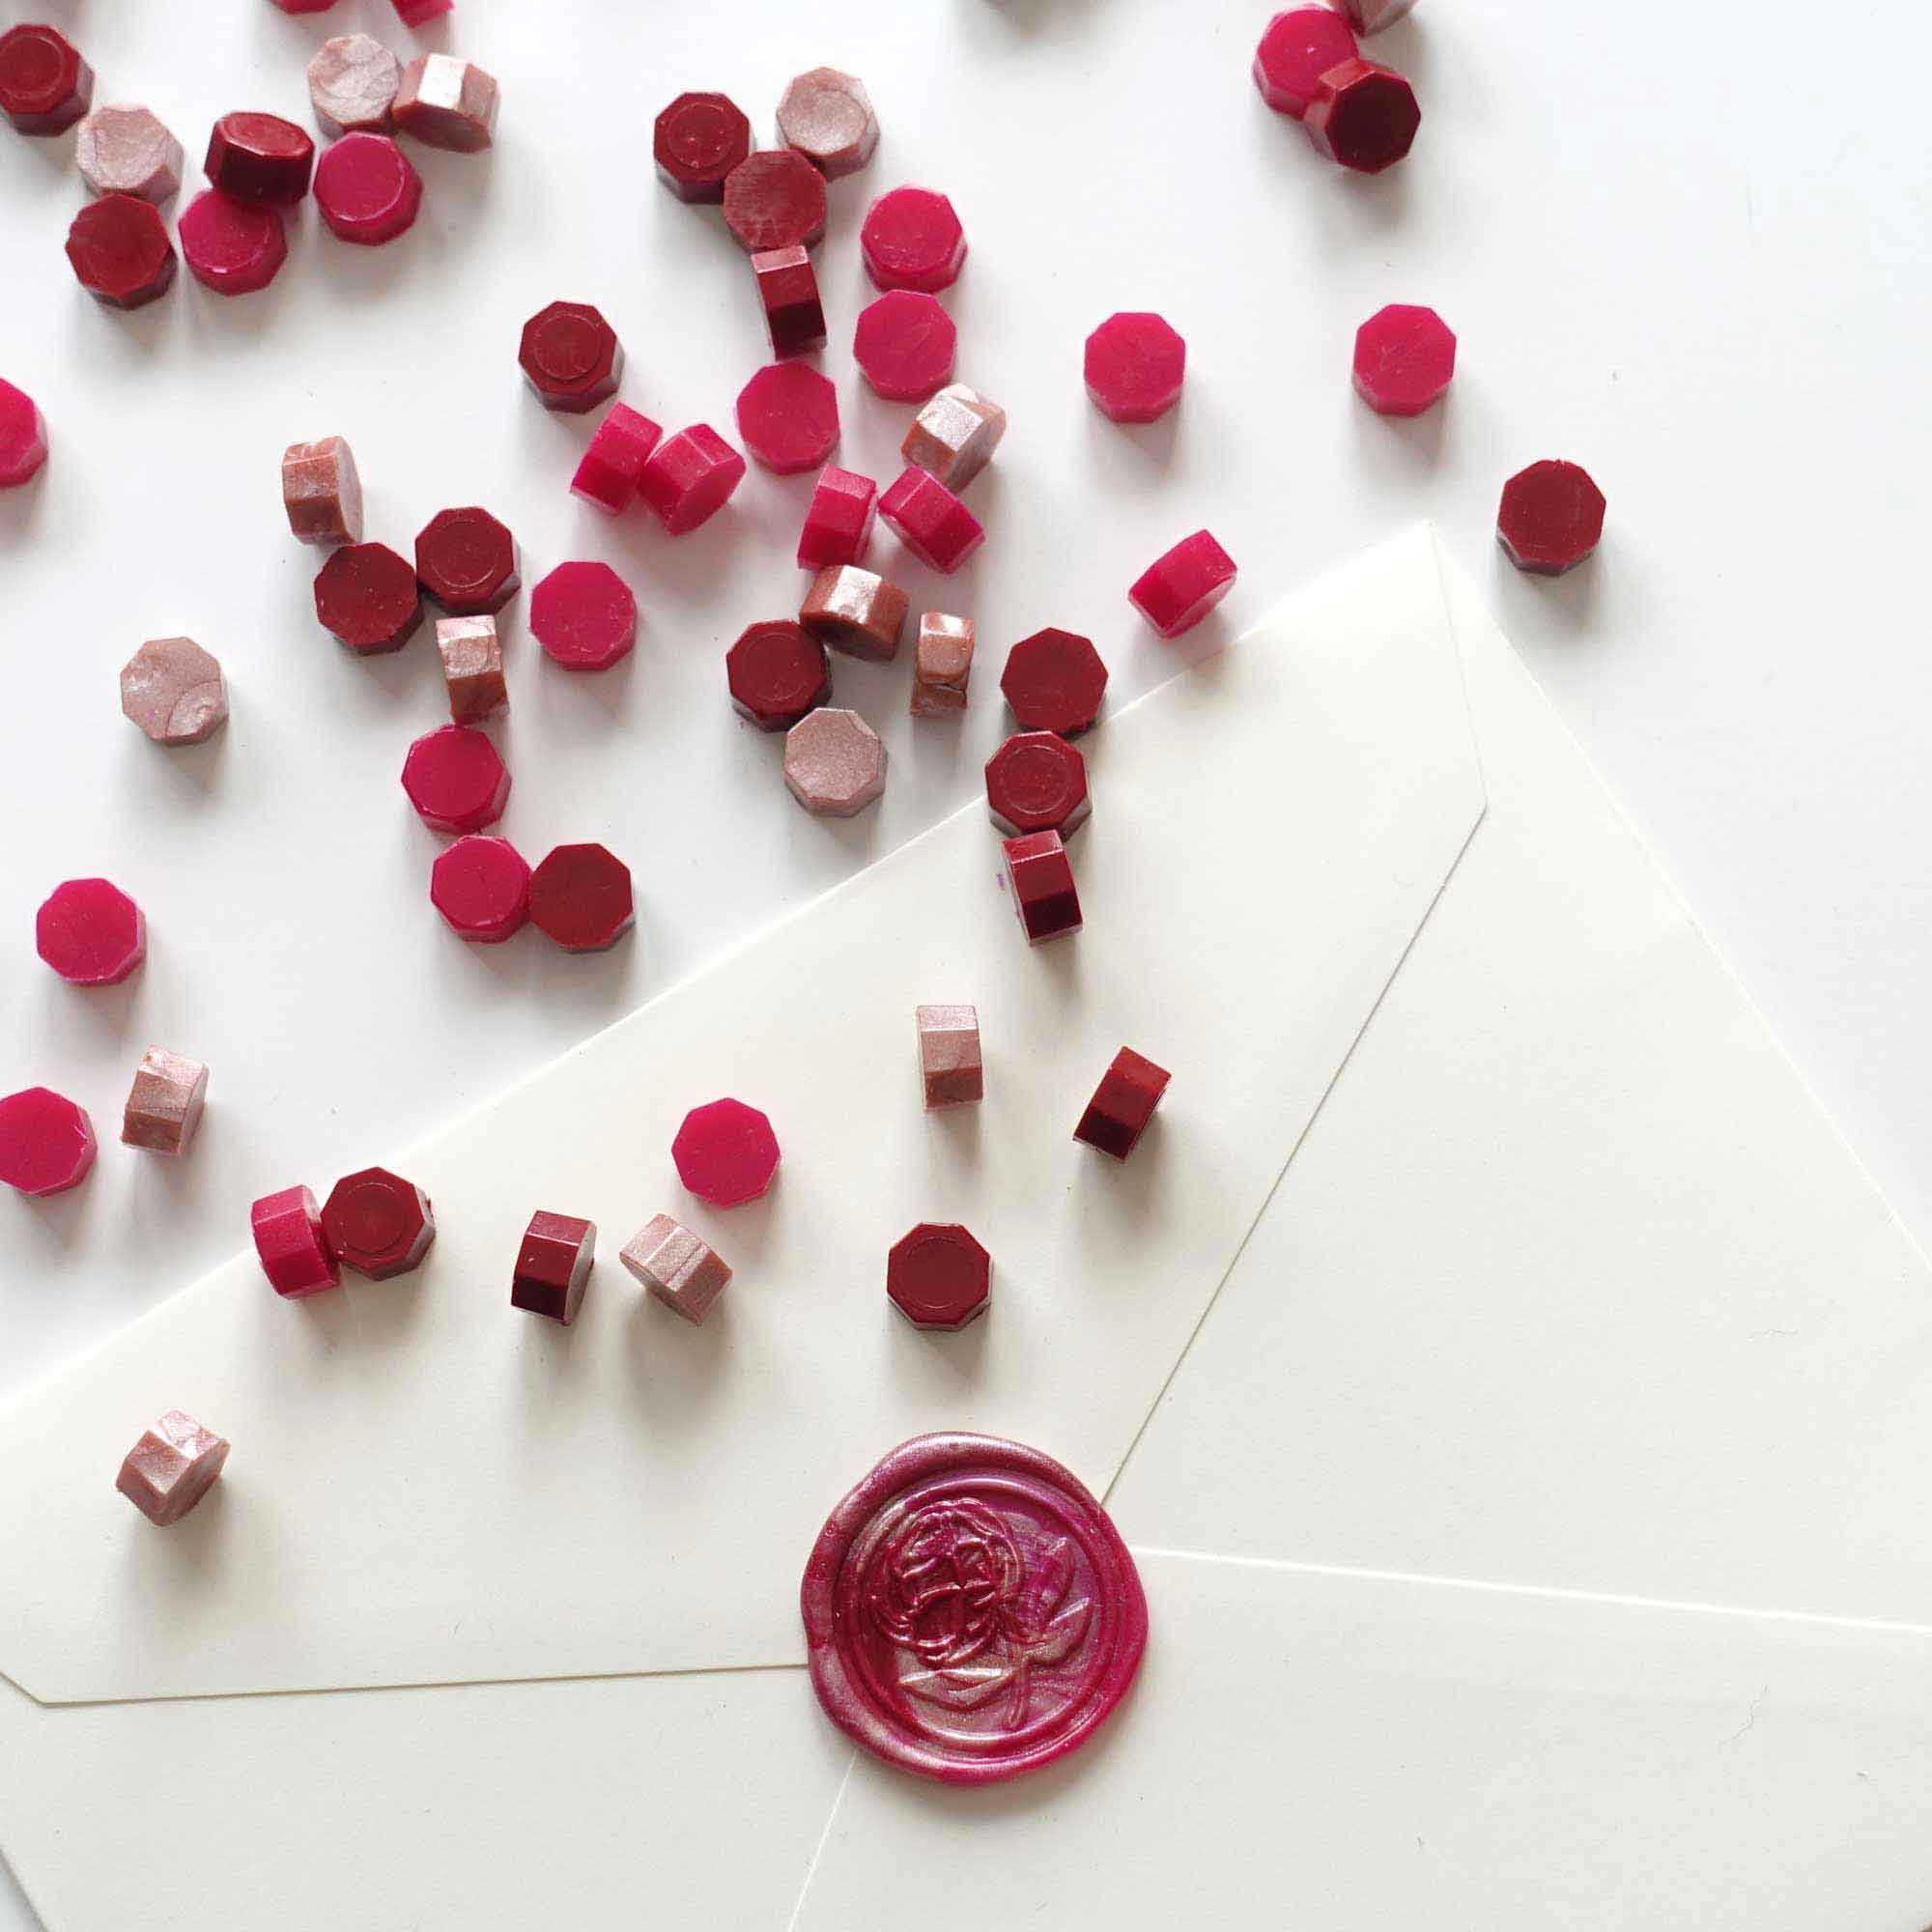 Mixed red plum wine rose sealing wax Australia envelopes